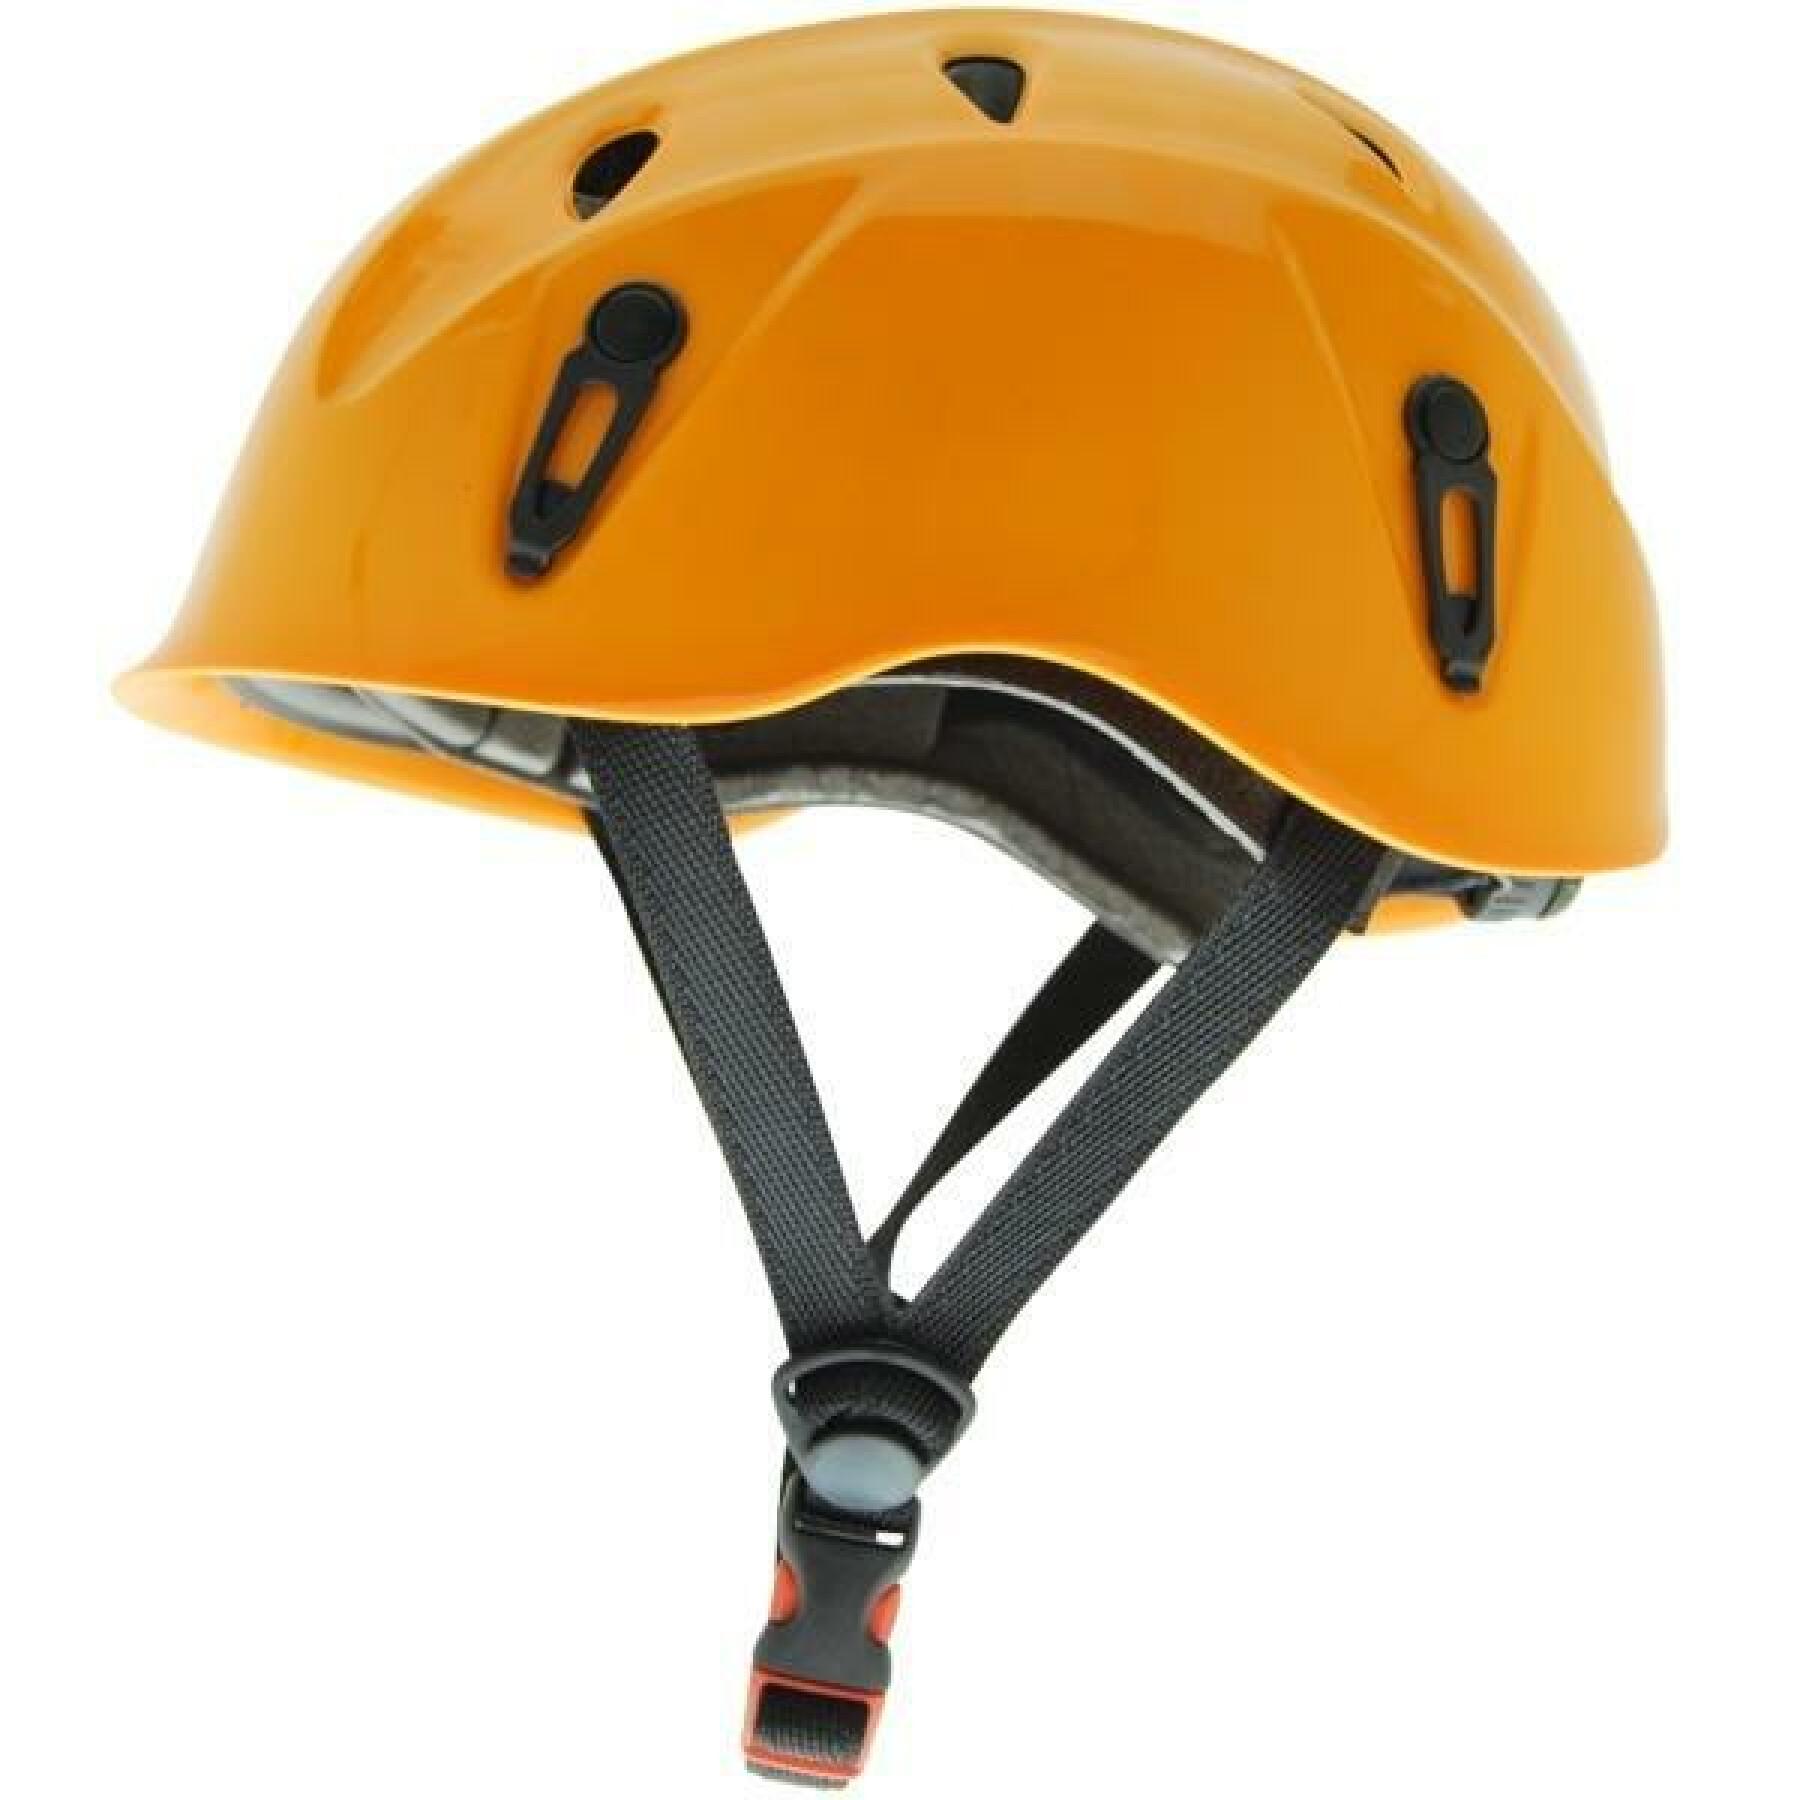 Climbing helmet for children Kong Casco bimbo (pikkio) tg.uni arancione